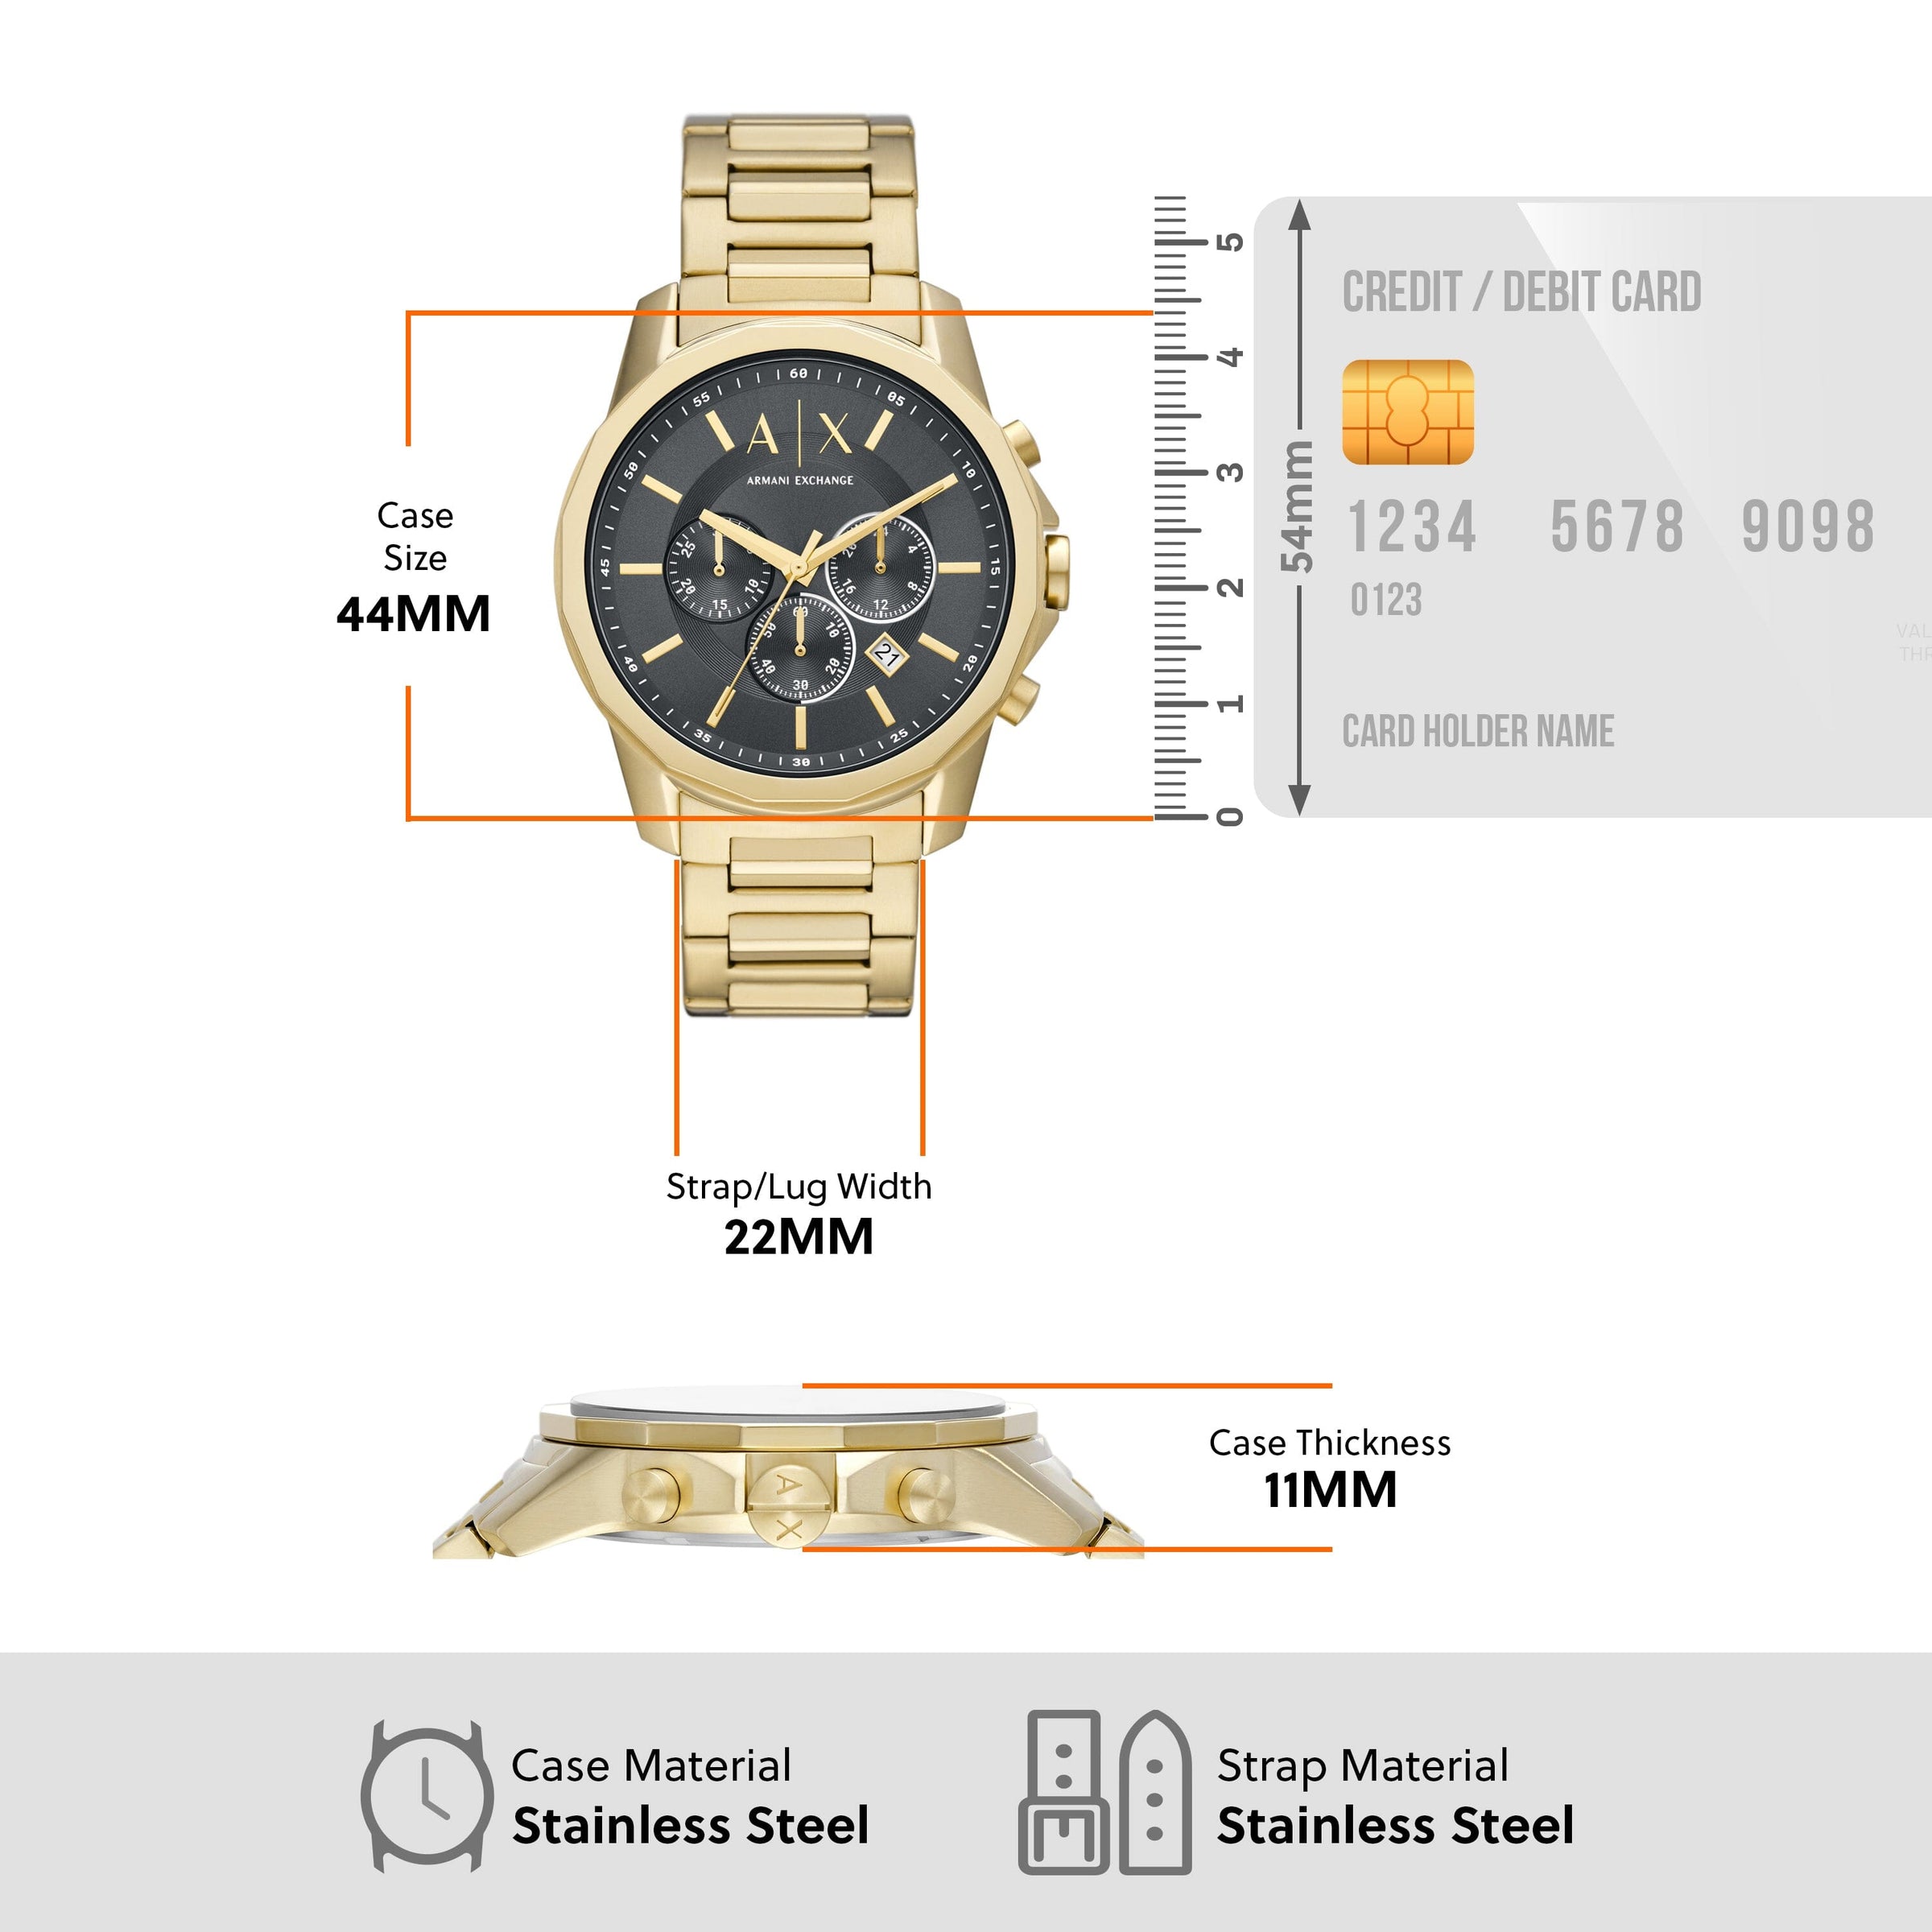 Armani Exchange Banks Black and Gold Men's Watch AX1721 Watches Armani Exchange 